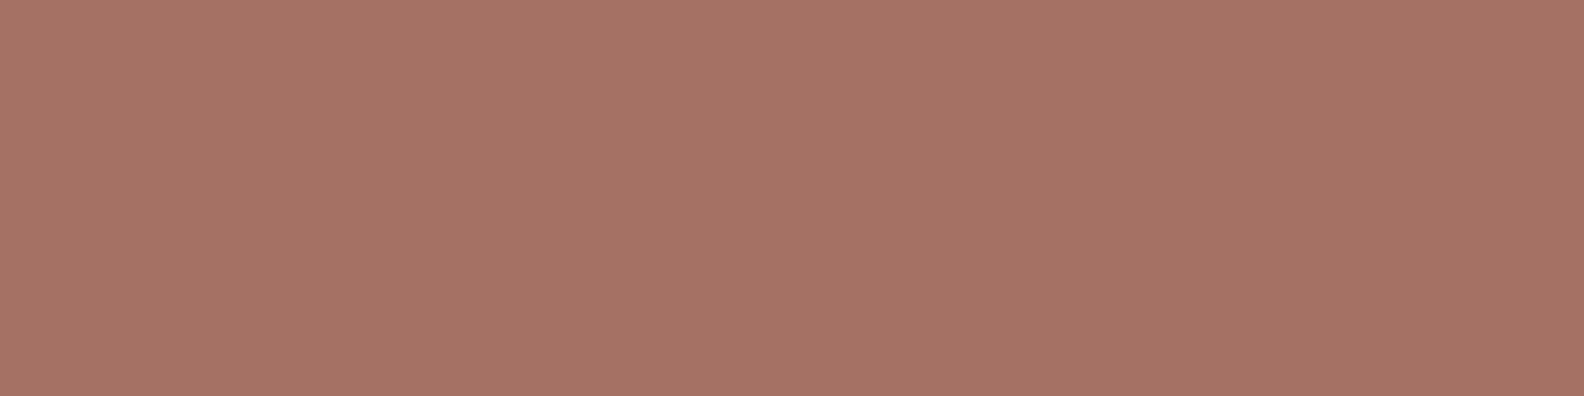 1584x396 Blast-off Bronze Solid Color Background